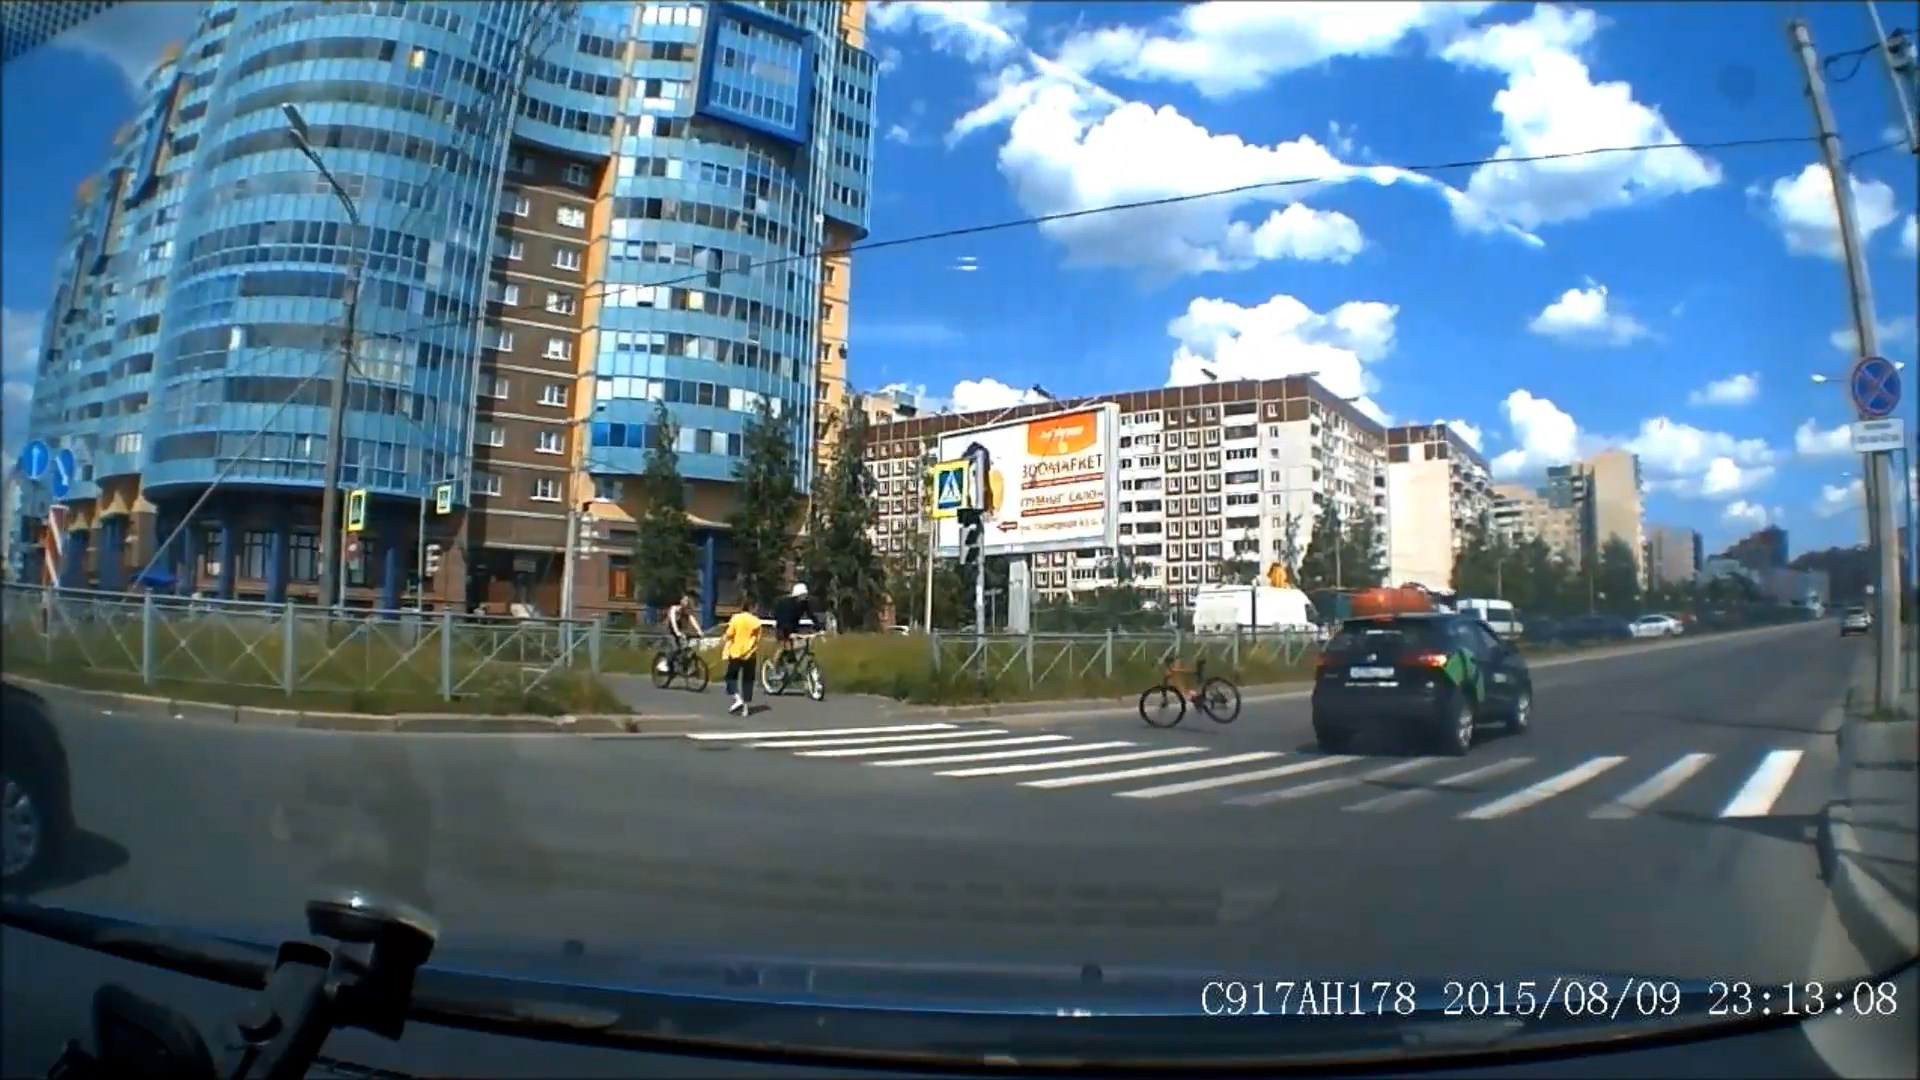 Скриншот видео из группы <a href="https://vk.com/wall-68471405_15225518" class="io-leave-page _" target="_blank">«ДТП и ЧП | Санкт-Петербург»</a>